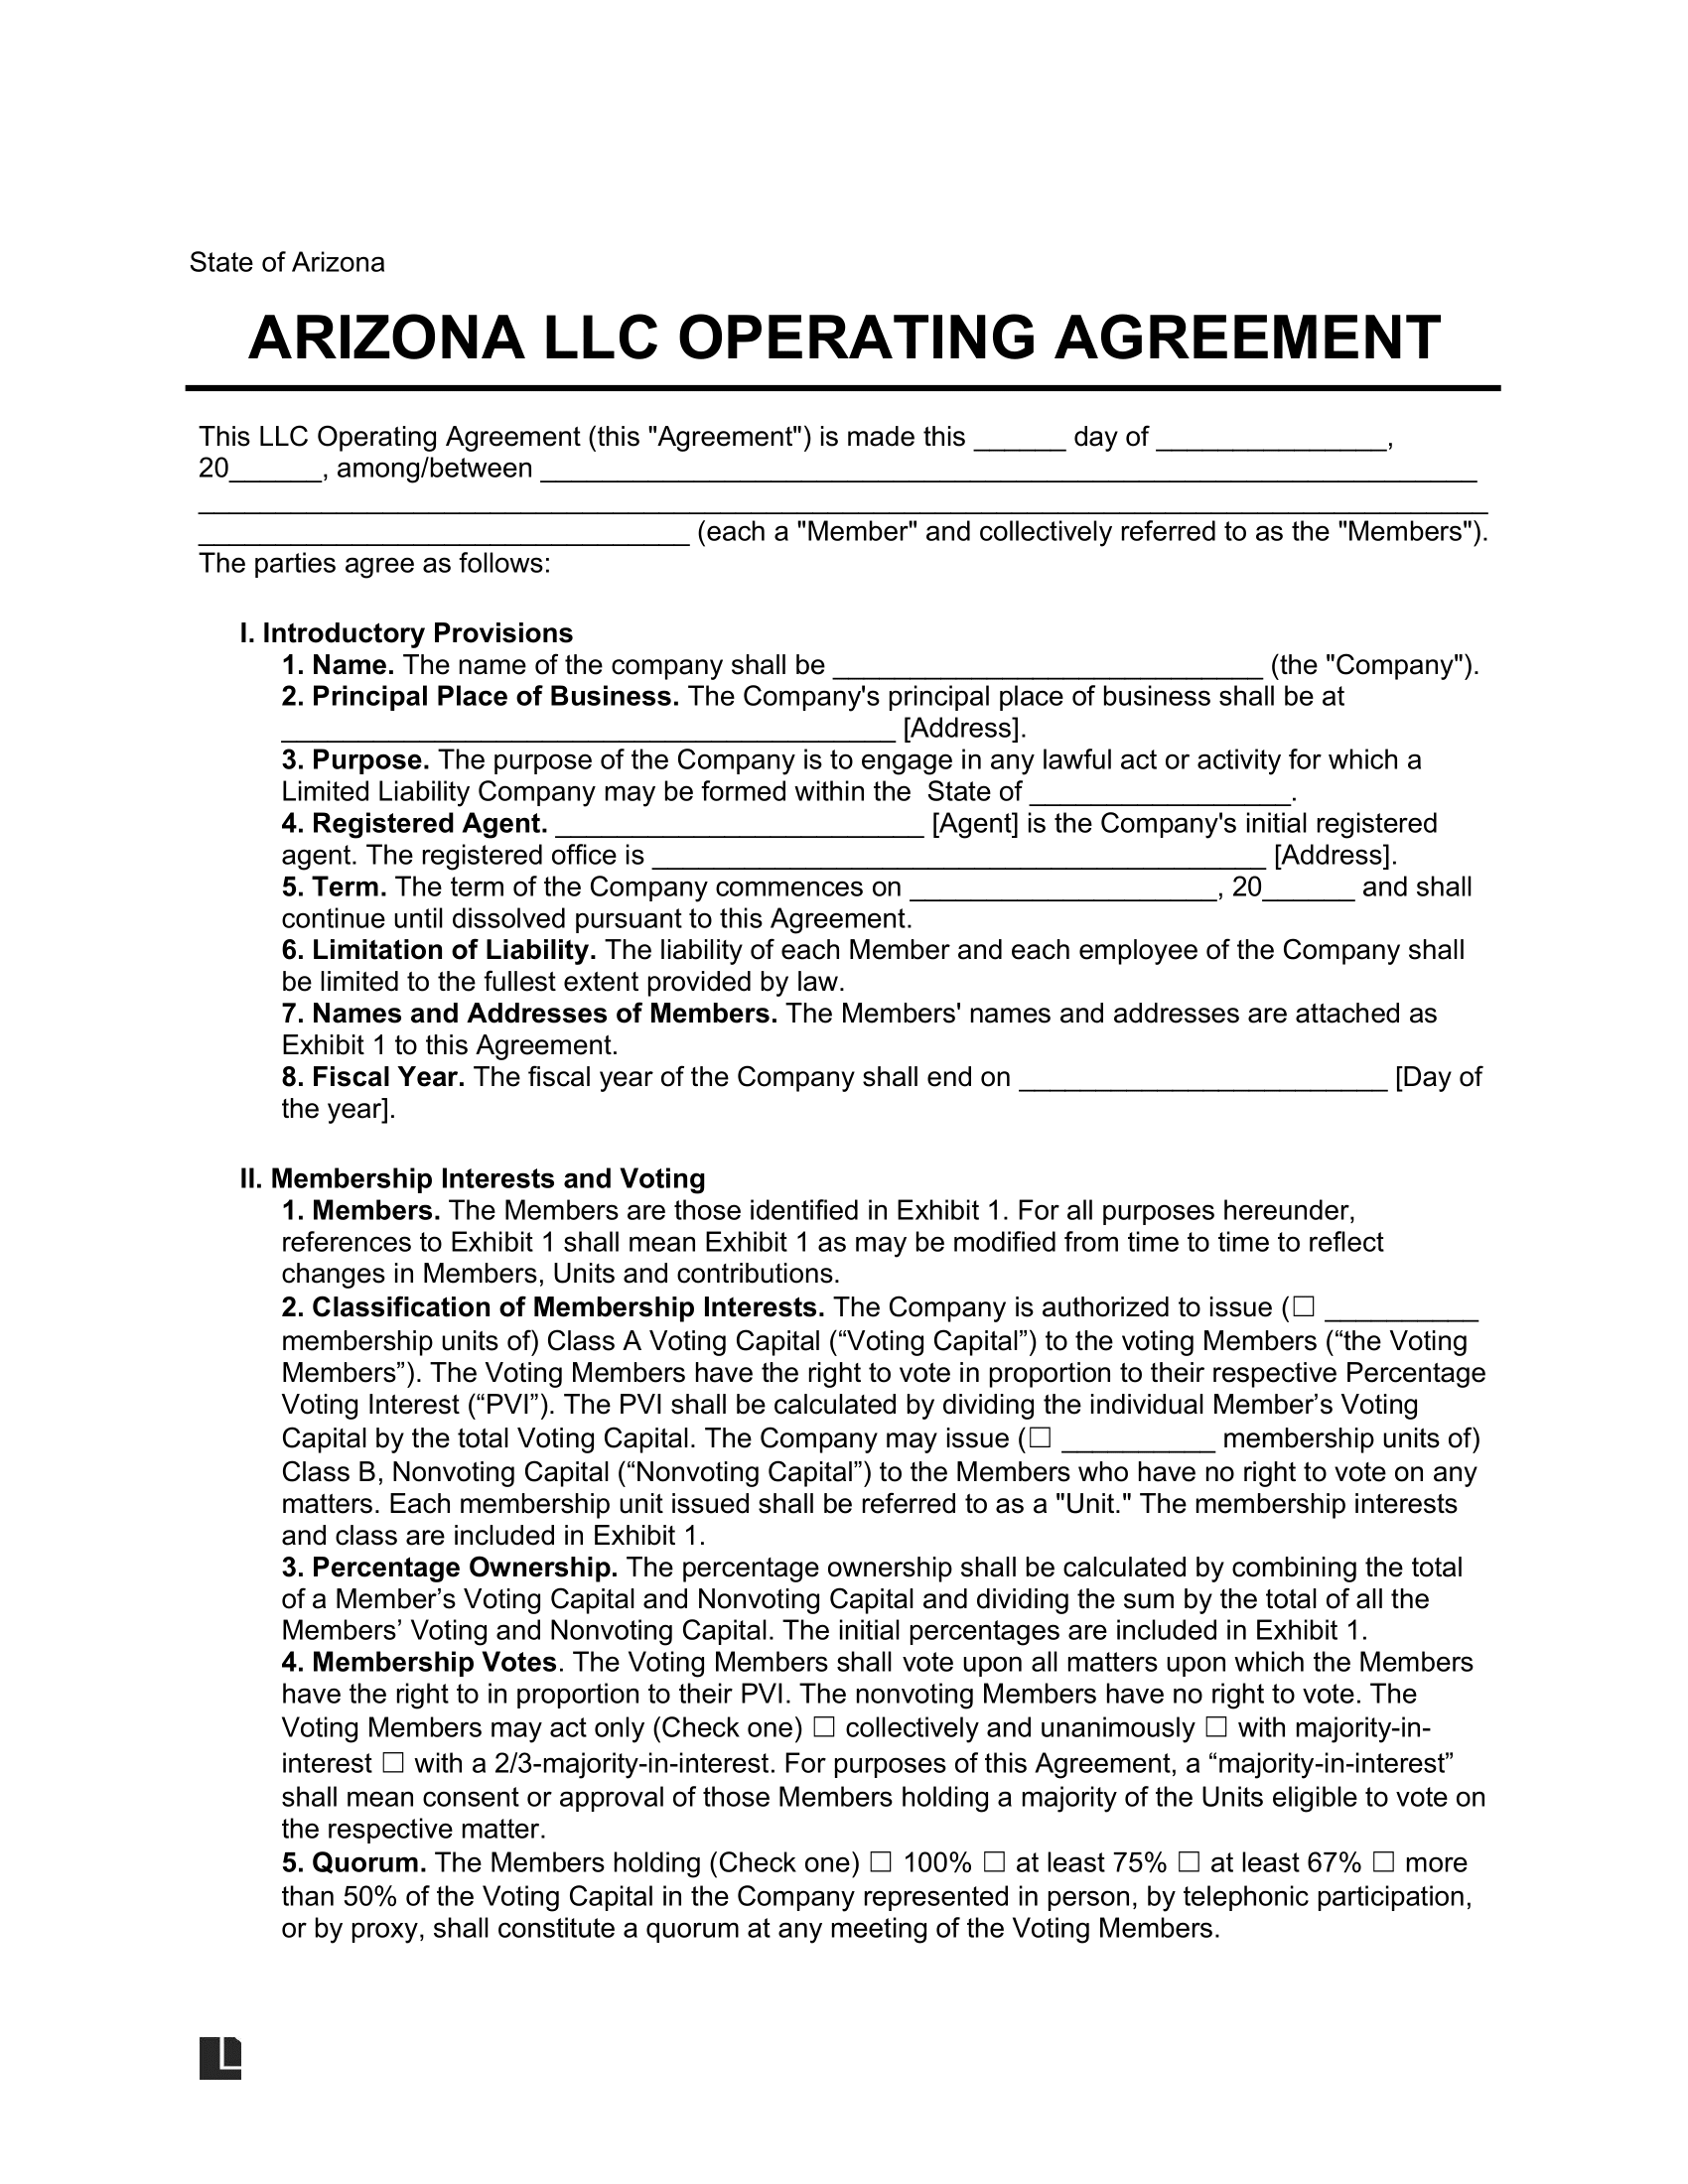 Arizona LLC Operating Agreement Template